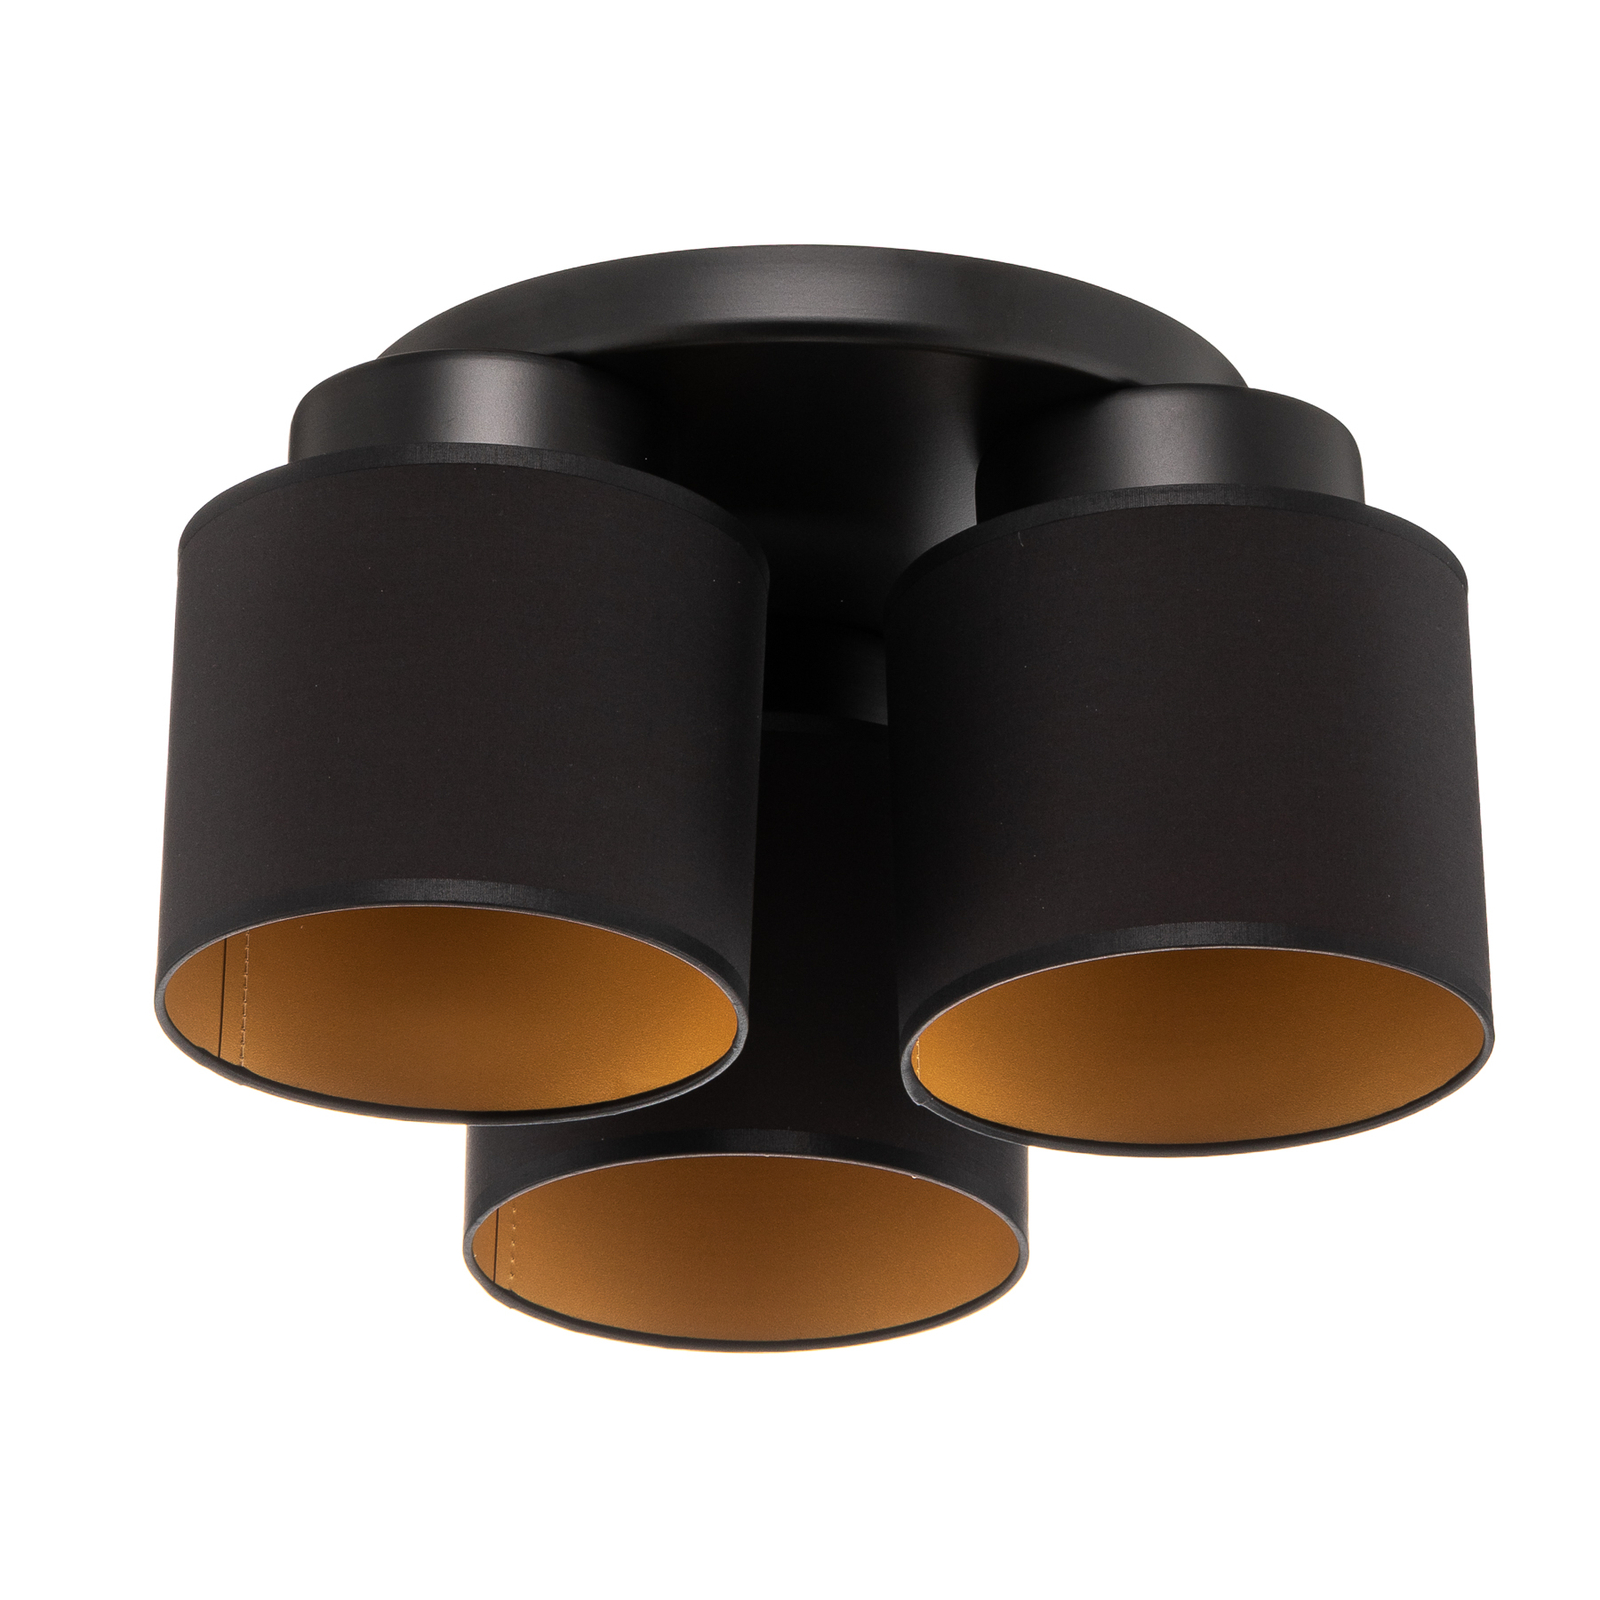 Ceiling light Soho cylindrical 3-bulb black/gold